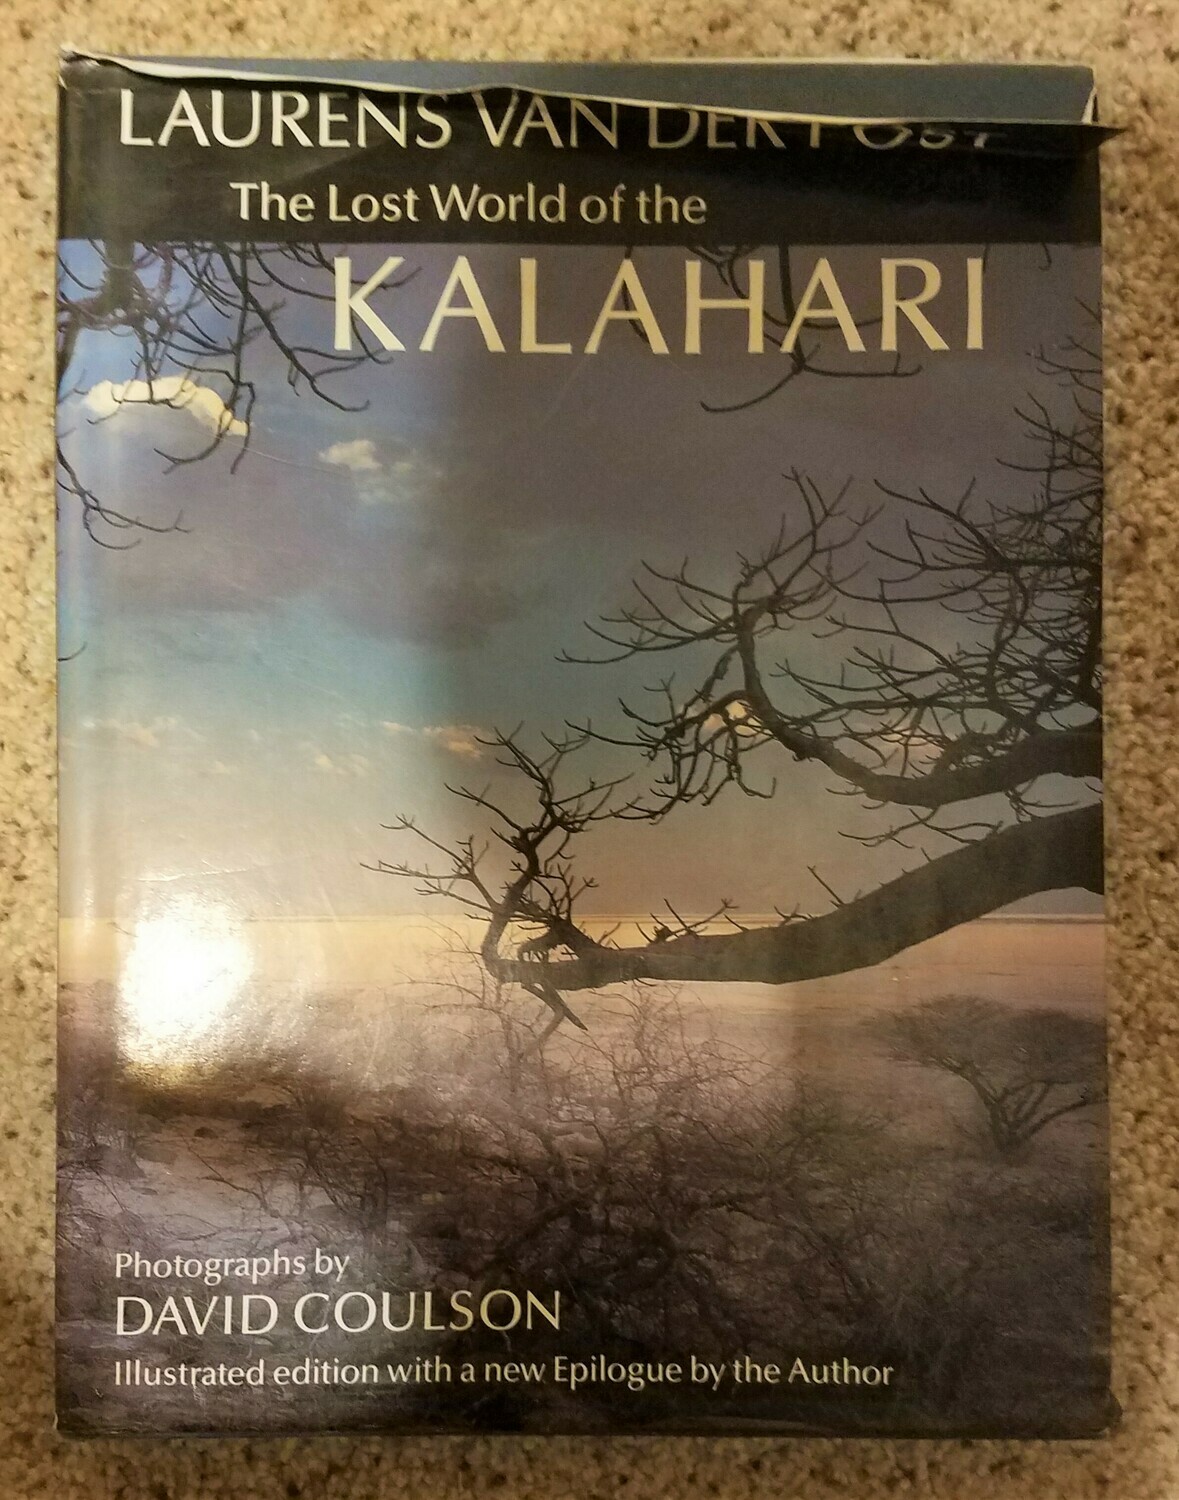 The Lost World of the Kalahari by Laurens Van Der Post and David Coulson